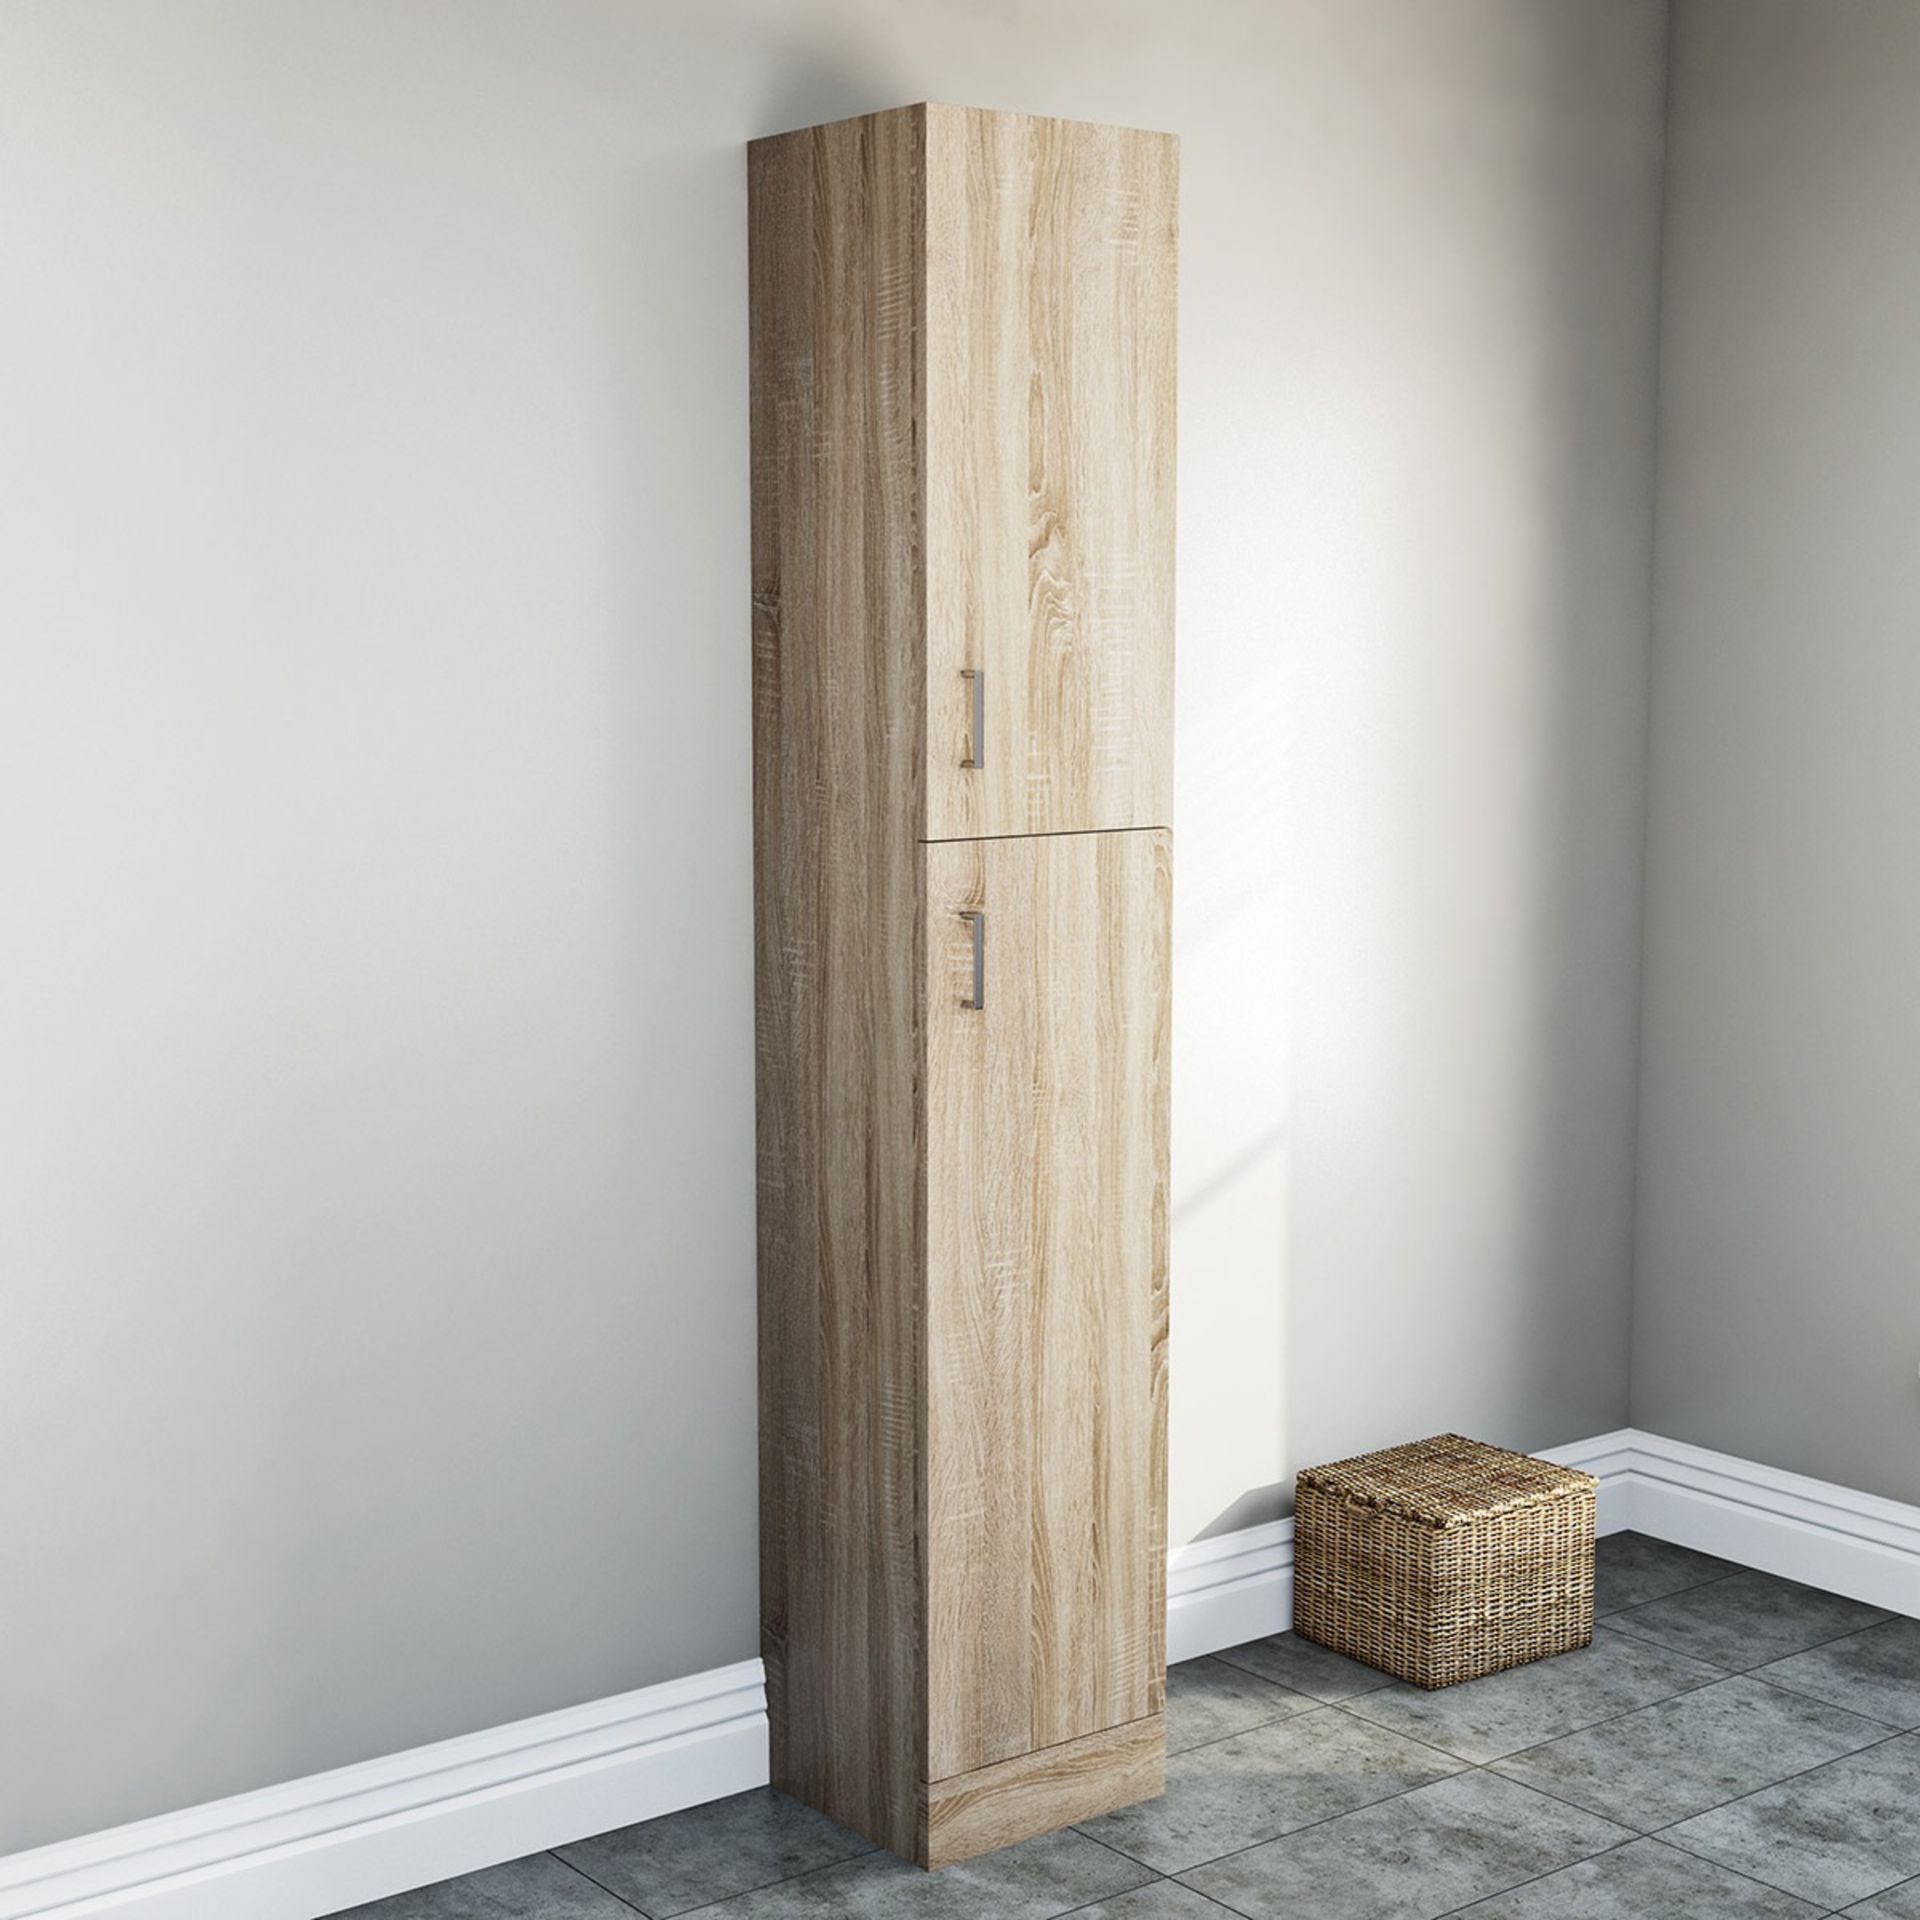 1 x Sienna Oak 300mm Tall Bathroom Storage Unit - Unused Stock - CL190 - Ref BR067 - Location: Bolto - Image 2 of 5